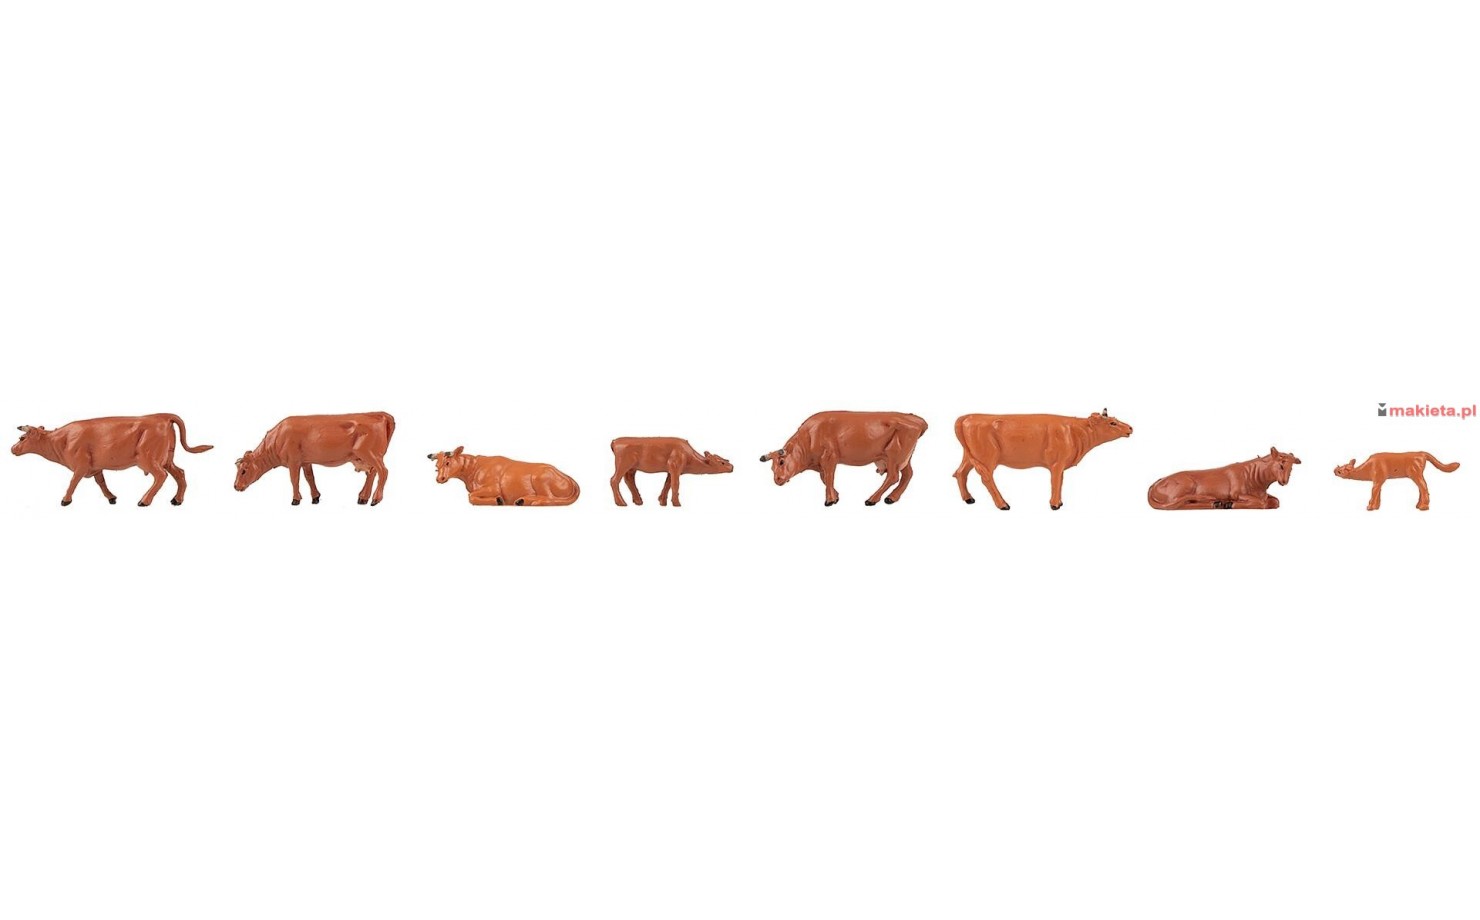 Faller 151918. Krowy rasy Angus, zestaw figurek, 8 sztuk, skala H0.